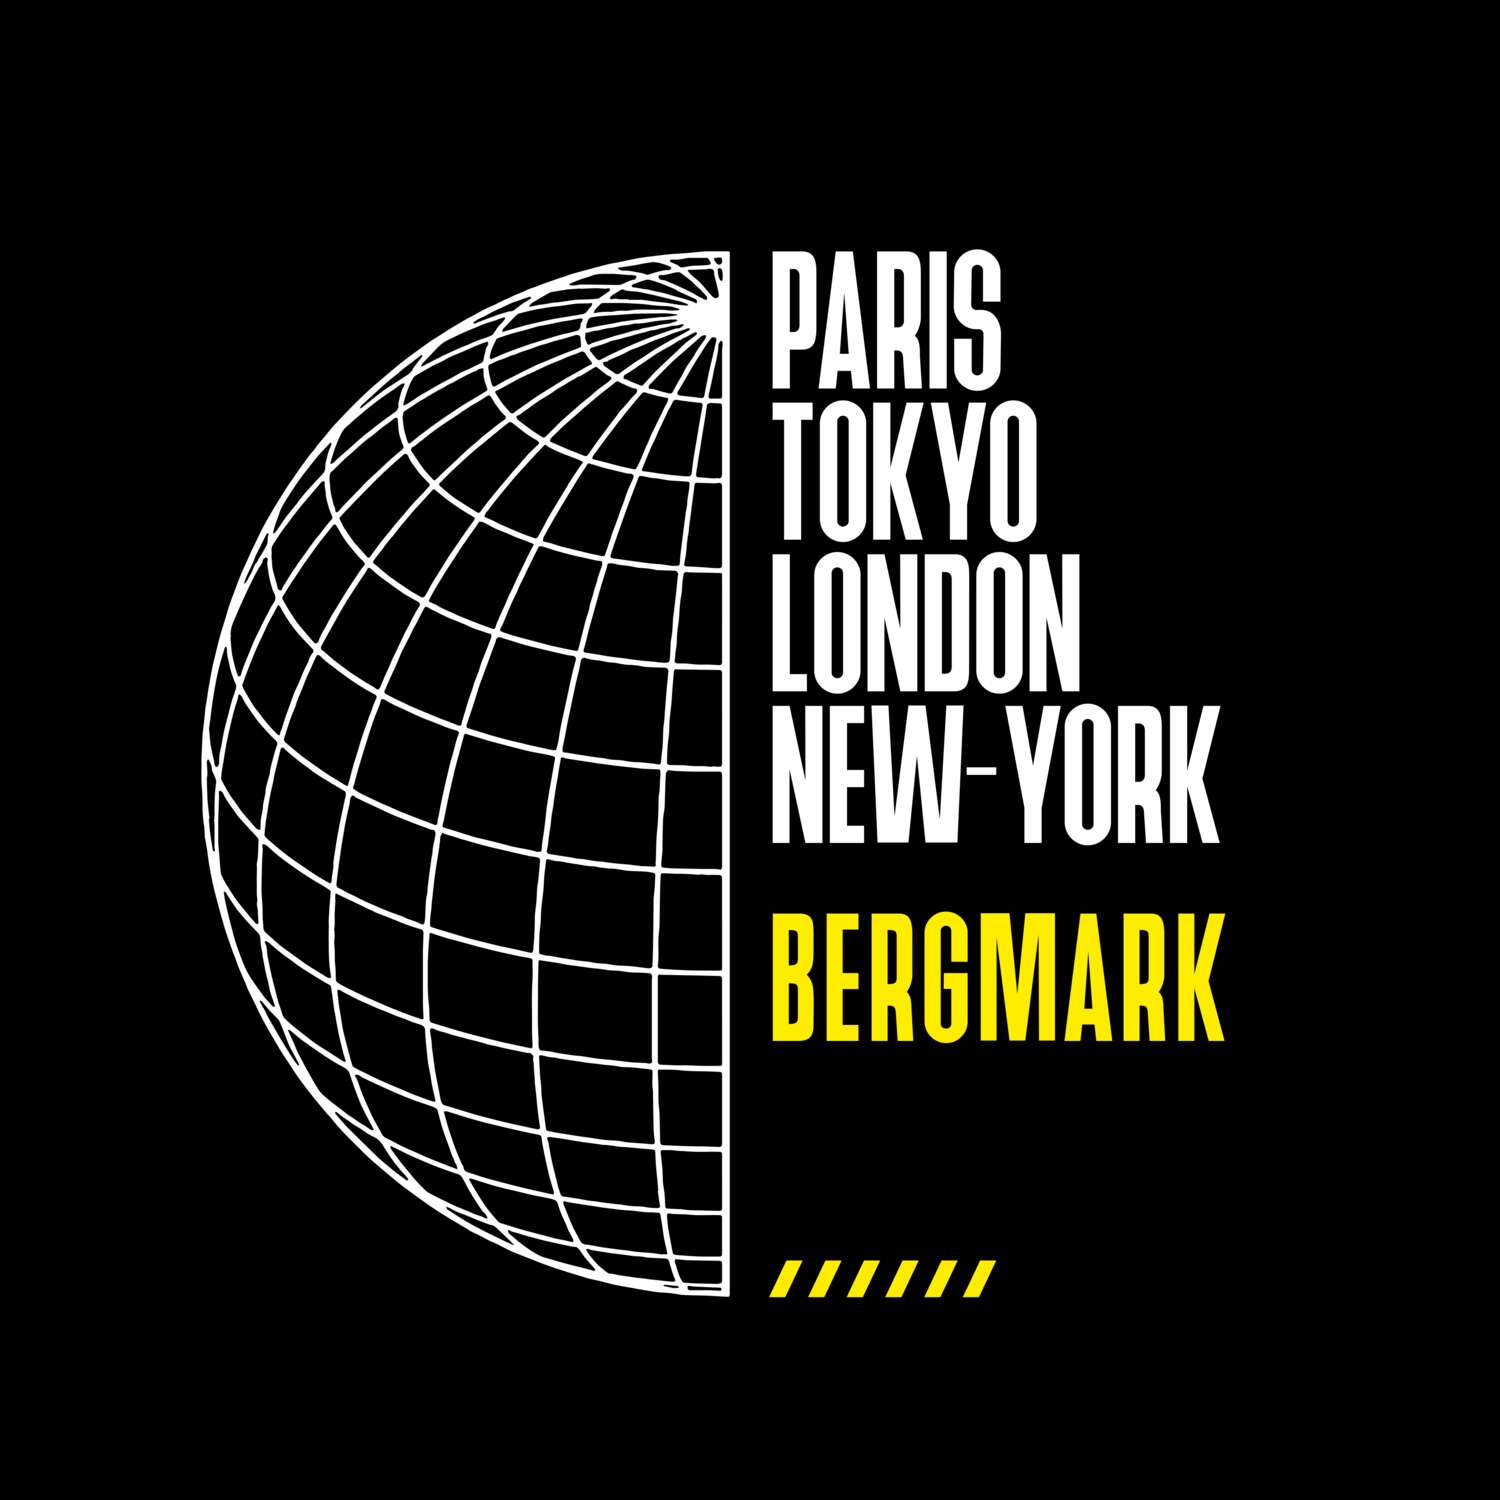 Bergmark T-Shirt »Paris Tokyo London«